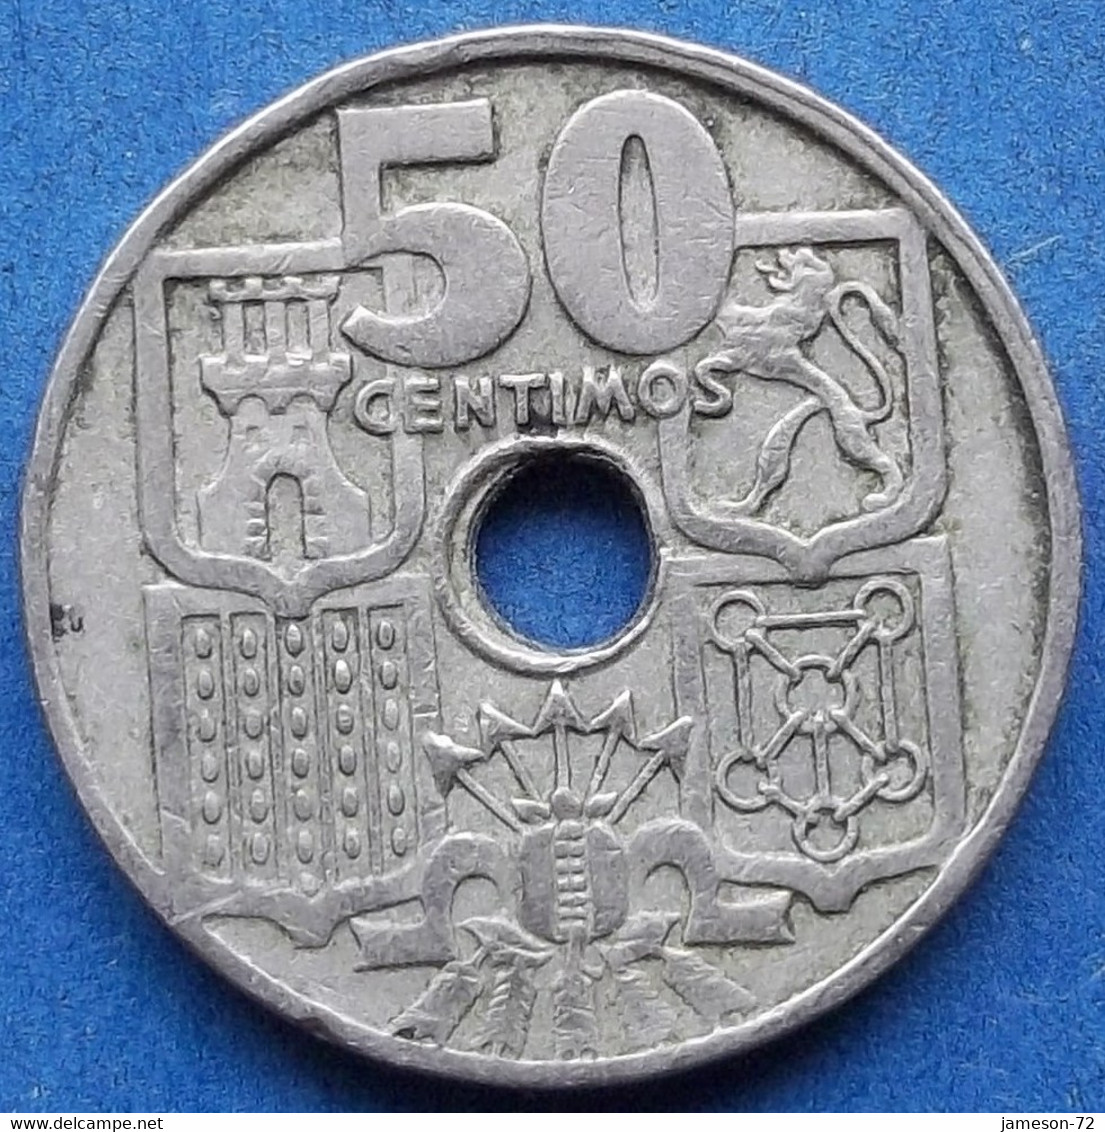 SPAIN - 50 Centimos 1949 KM# 777 Francisco Franco (1936-1975) - Edelweiss Coins - 50 Céntimos